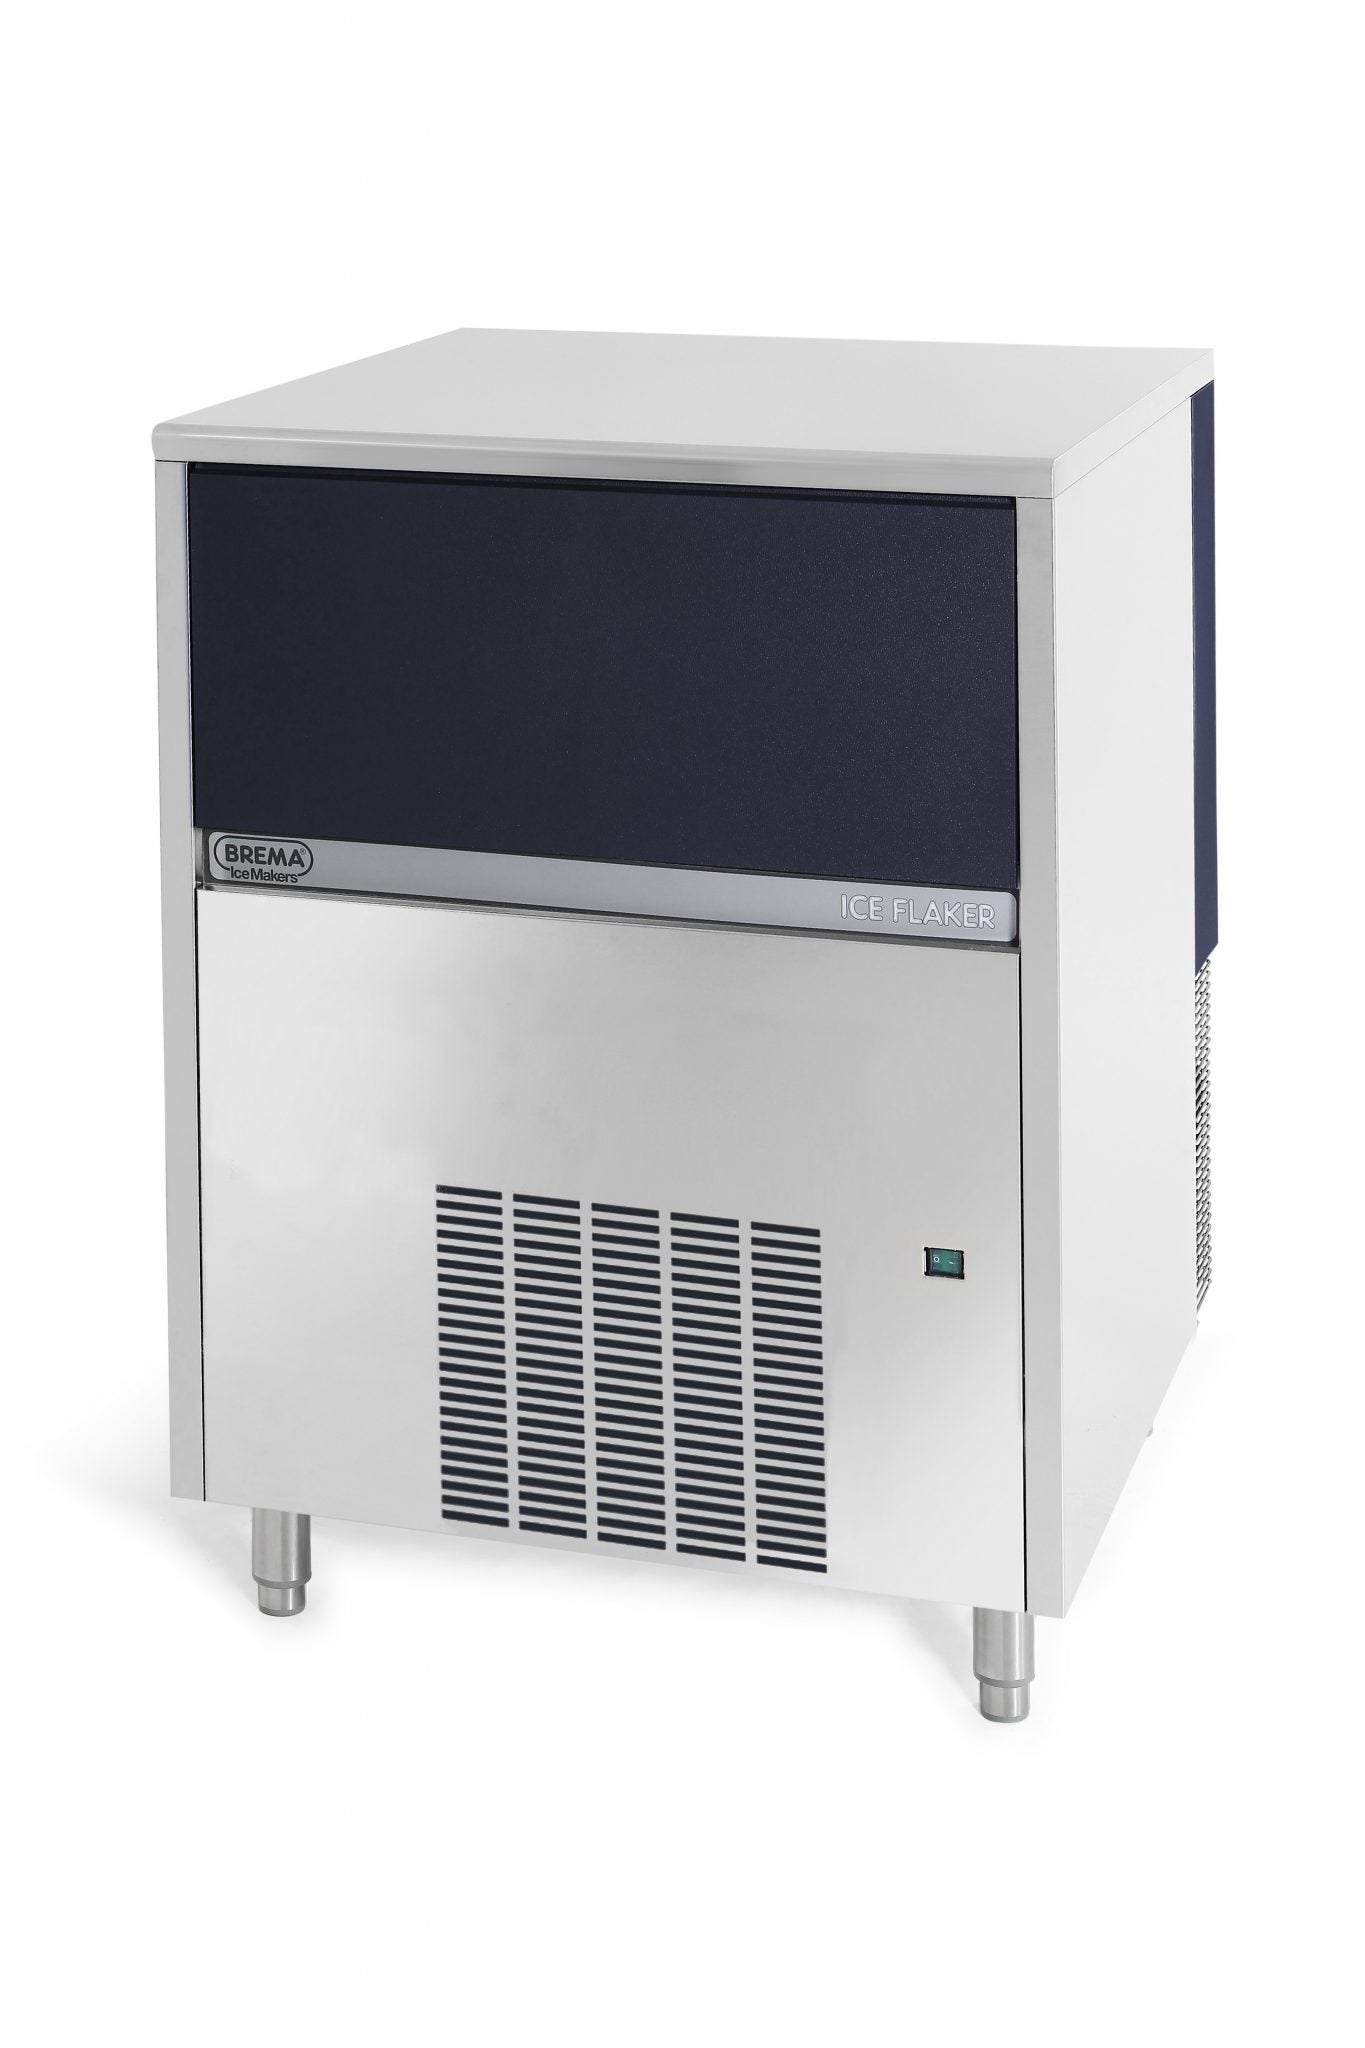 Eurodib Brema Commercial FLAKE Ice Machine GB1504A HC